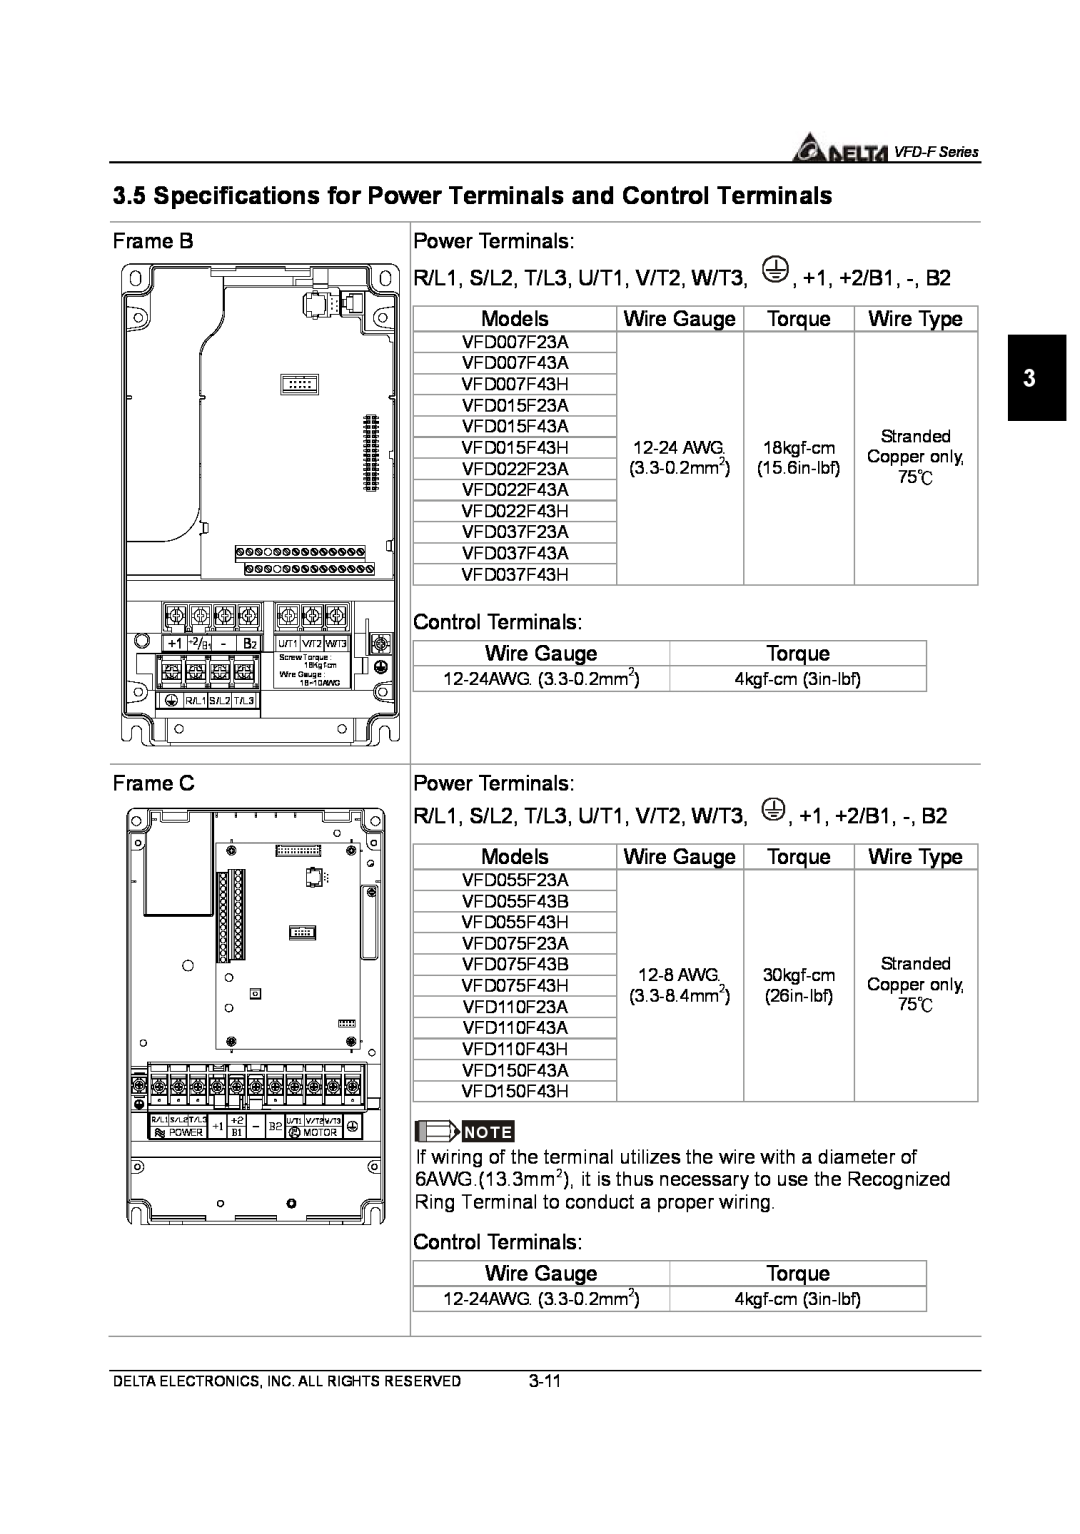 Delta Electronics VFD-F Series manual Specifications for Power Terminals and Control Terminals, R/L1 S/L2 T/L3 